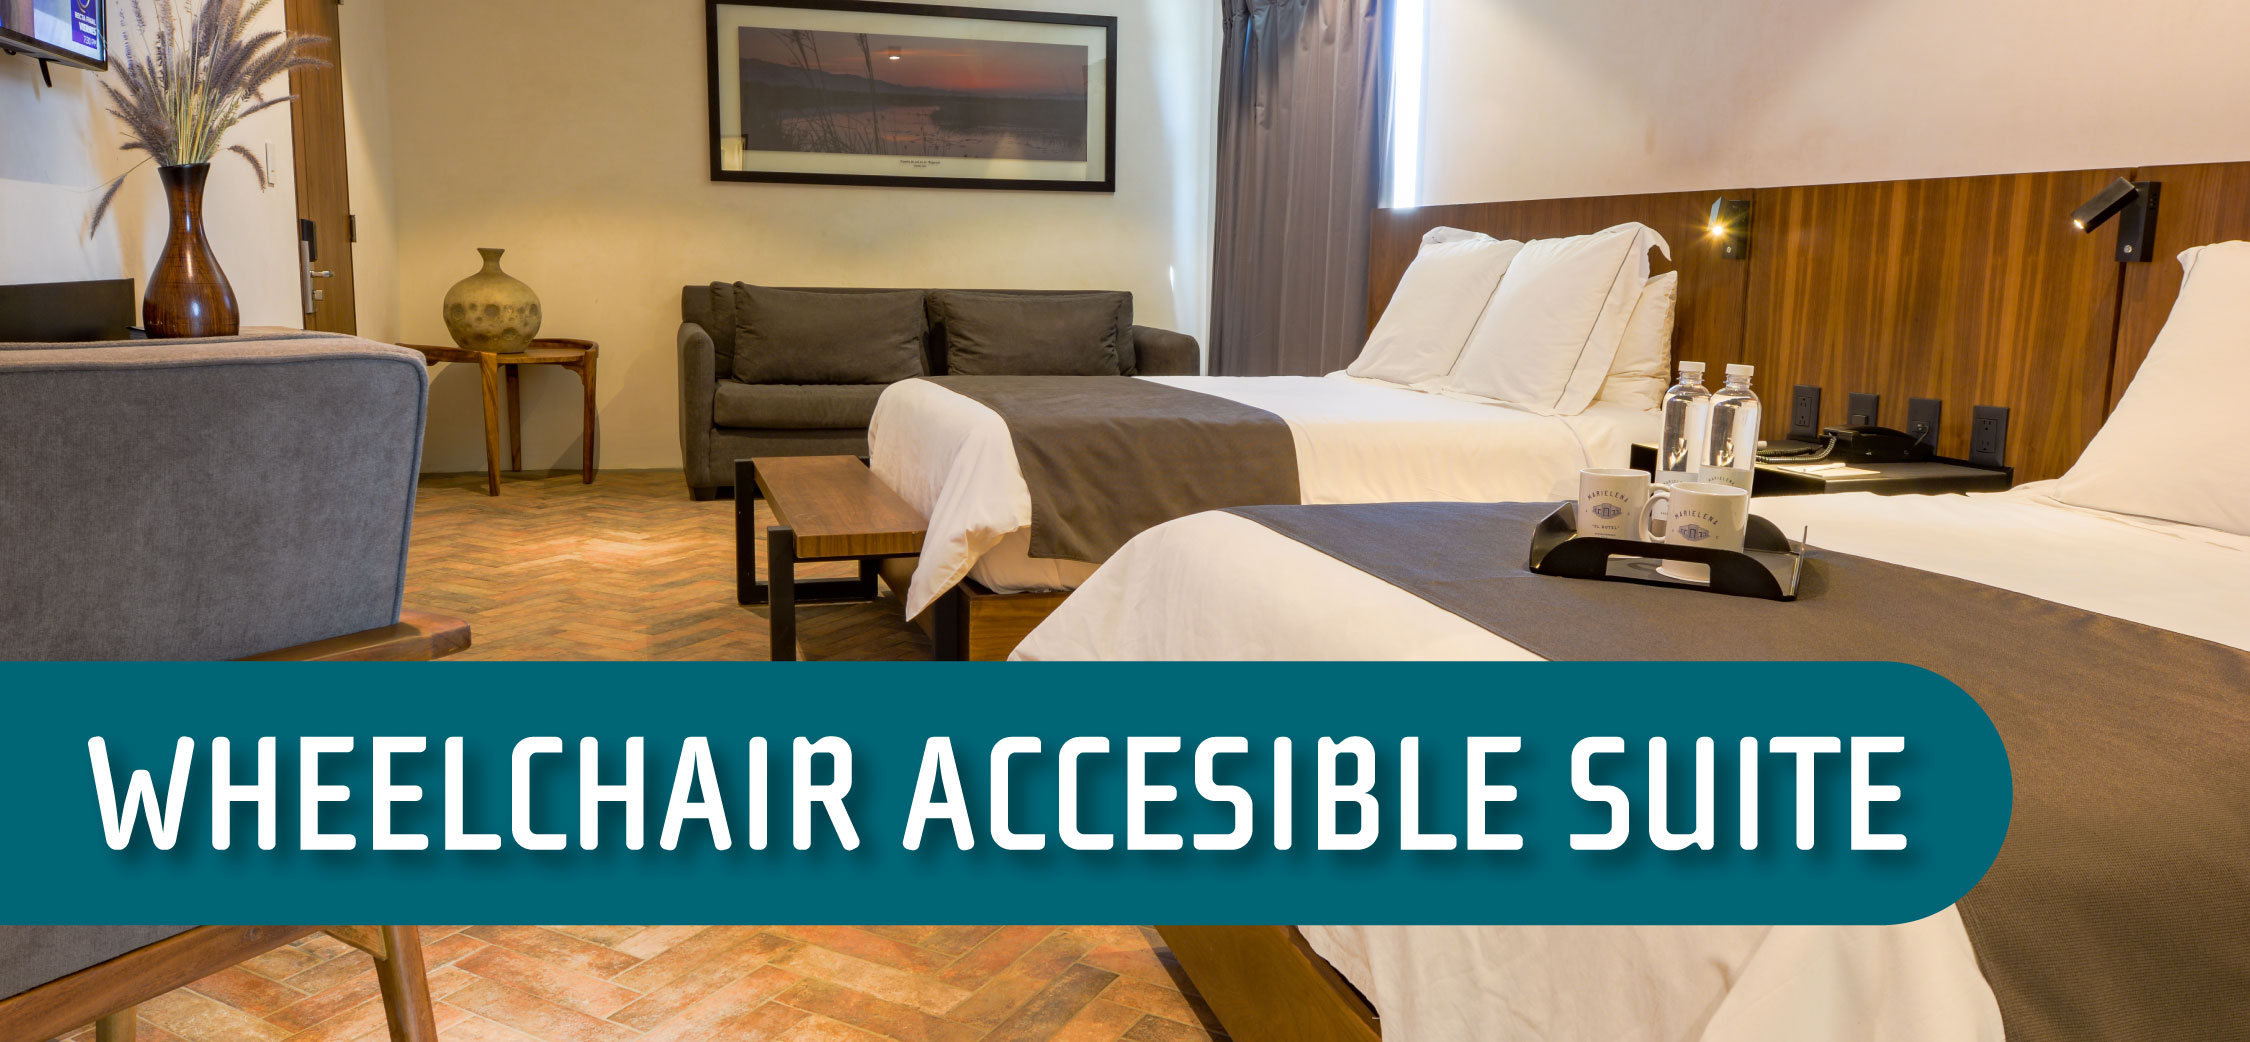 wheelchair-accesible-suite